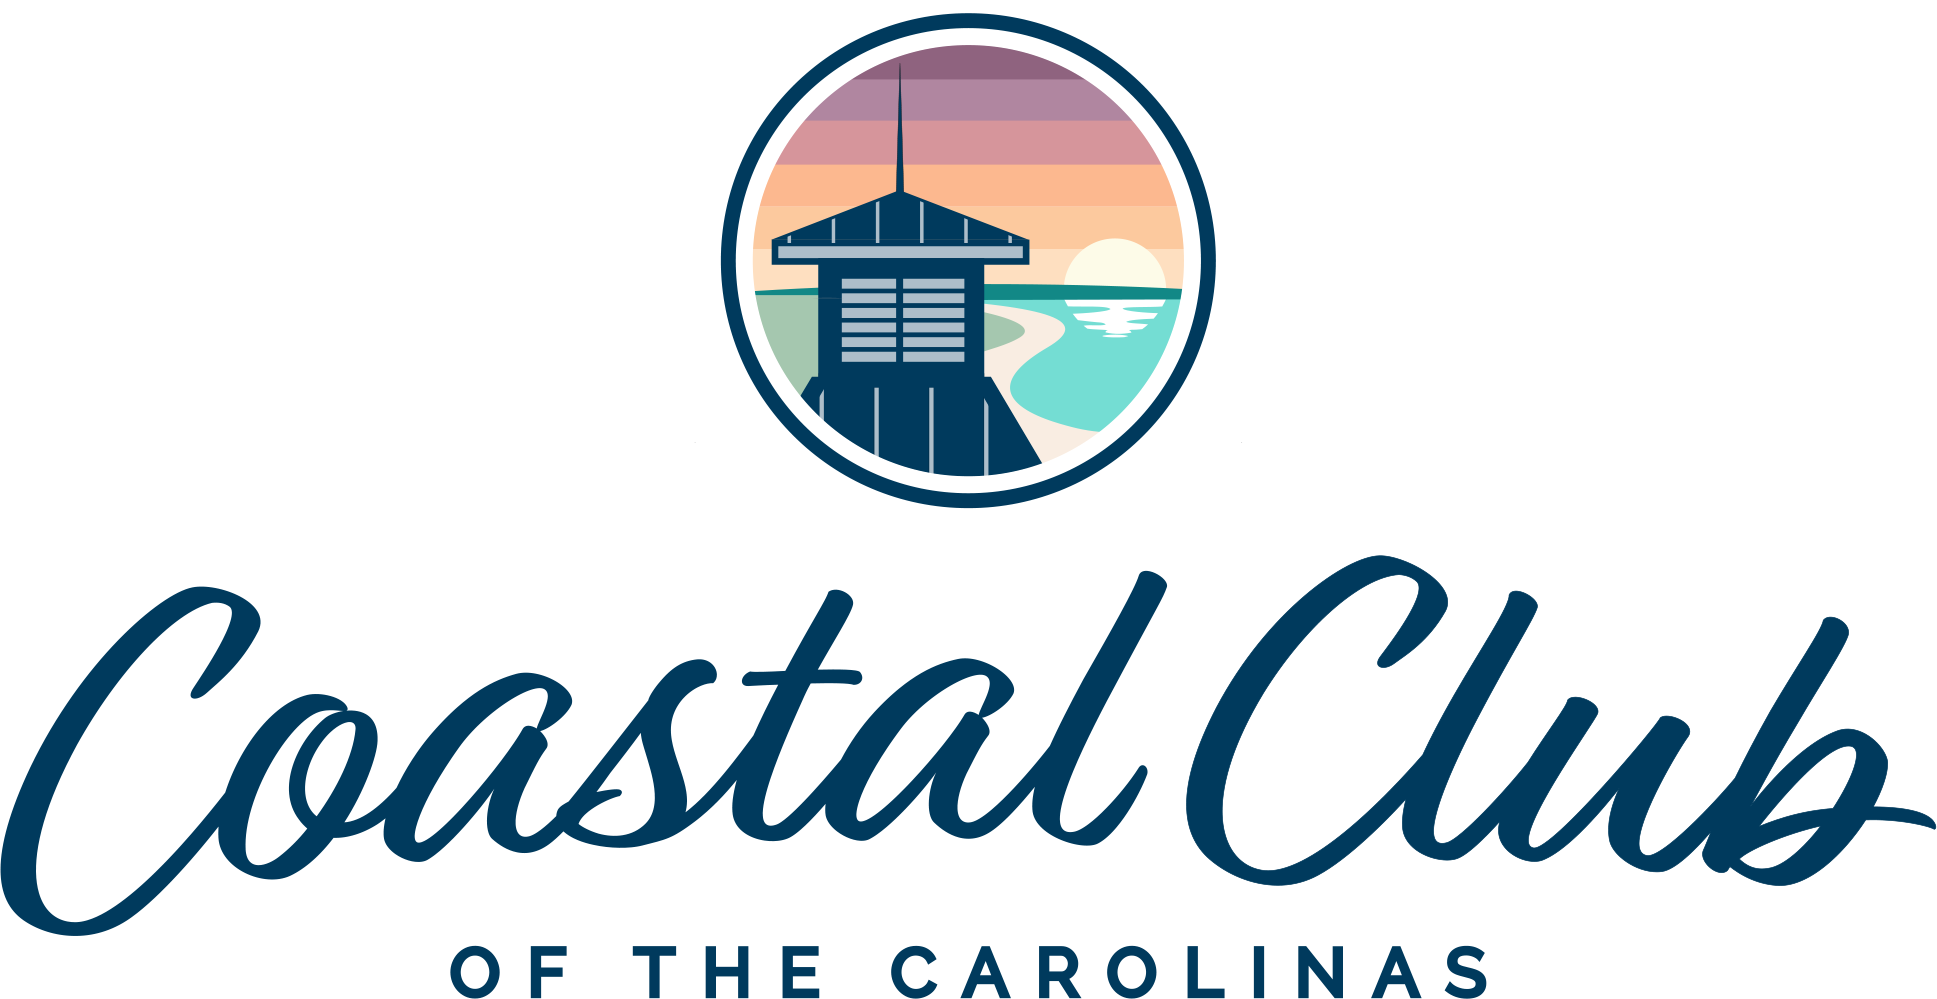 Coastal Club of the Carolinas